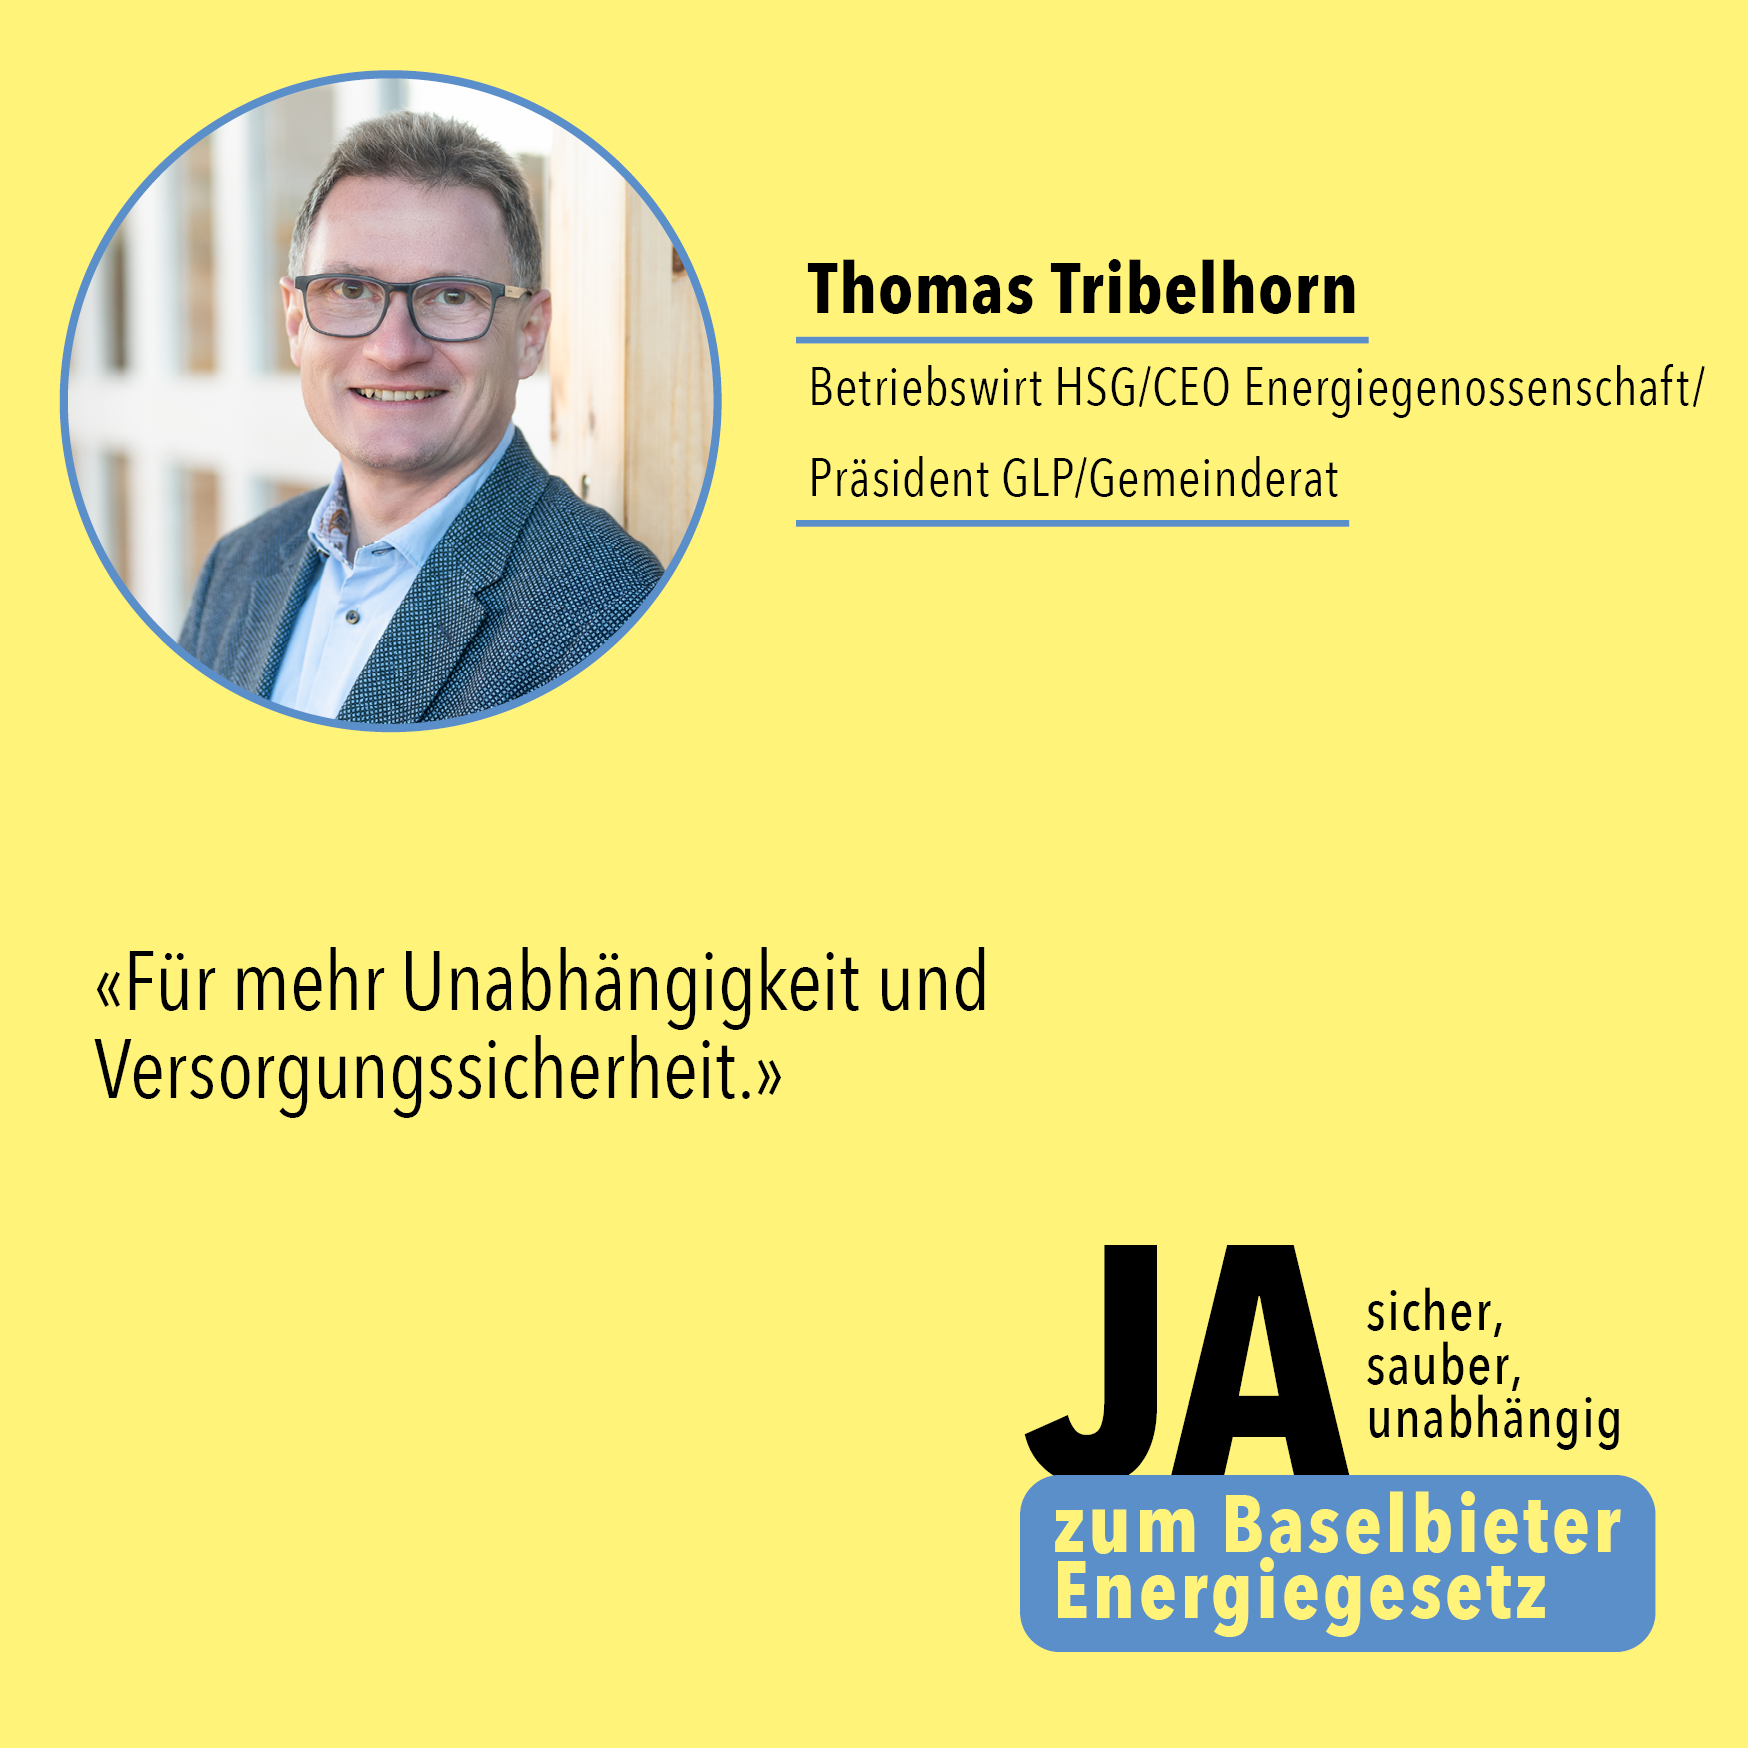 Thomas Tribelhorn